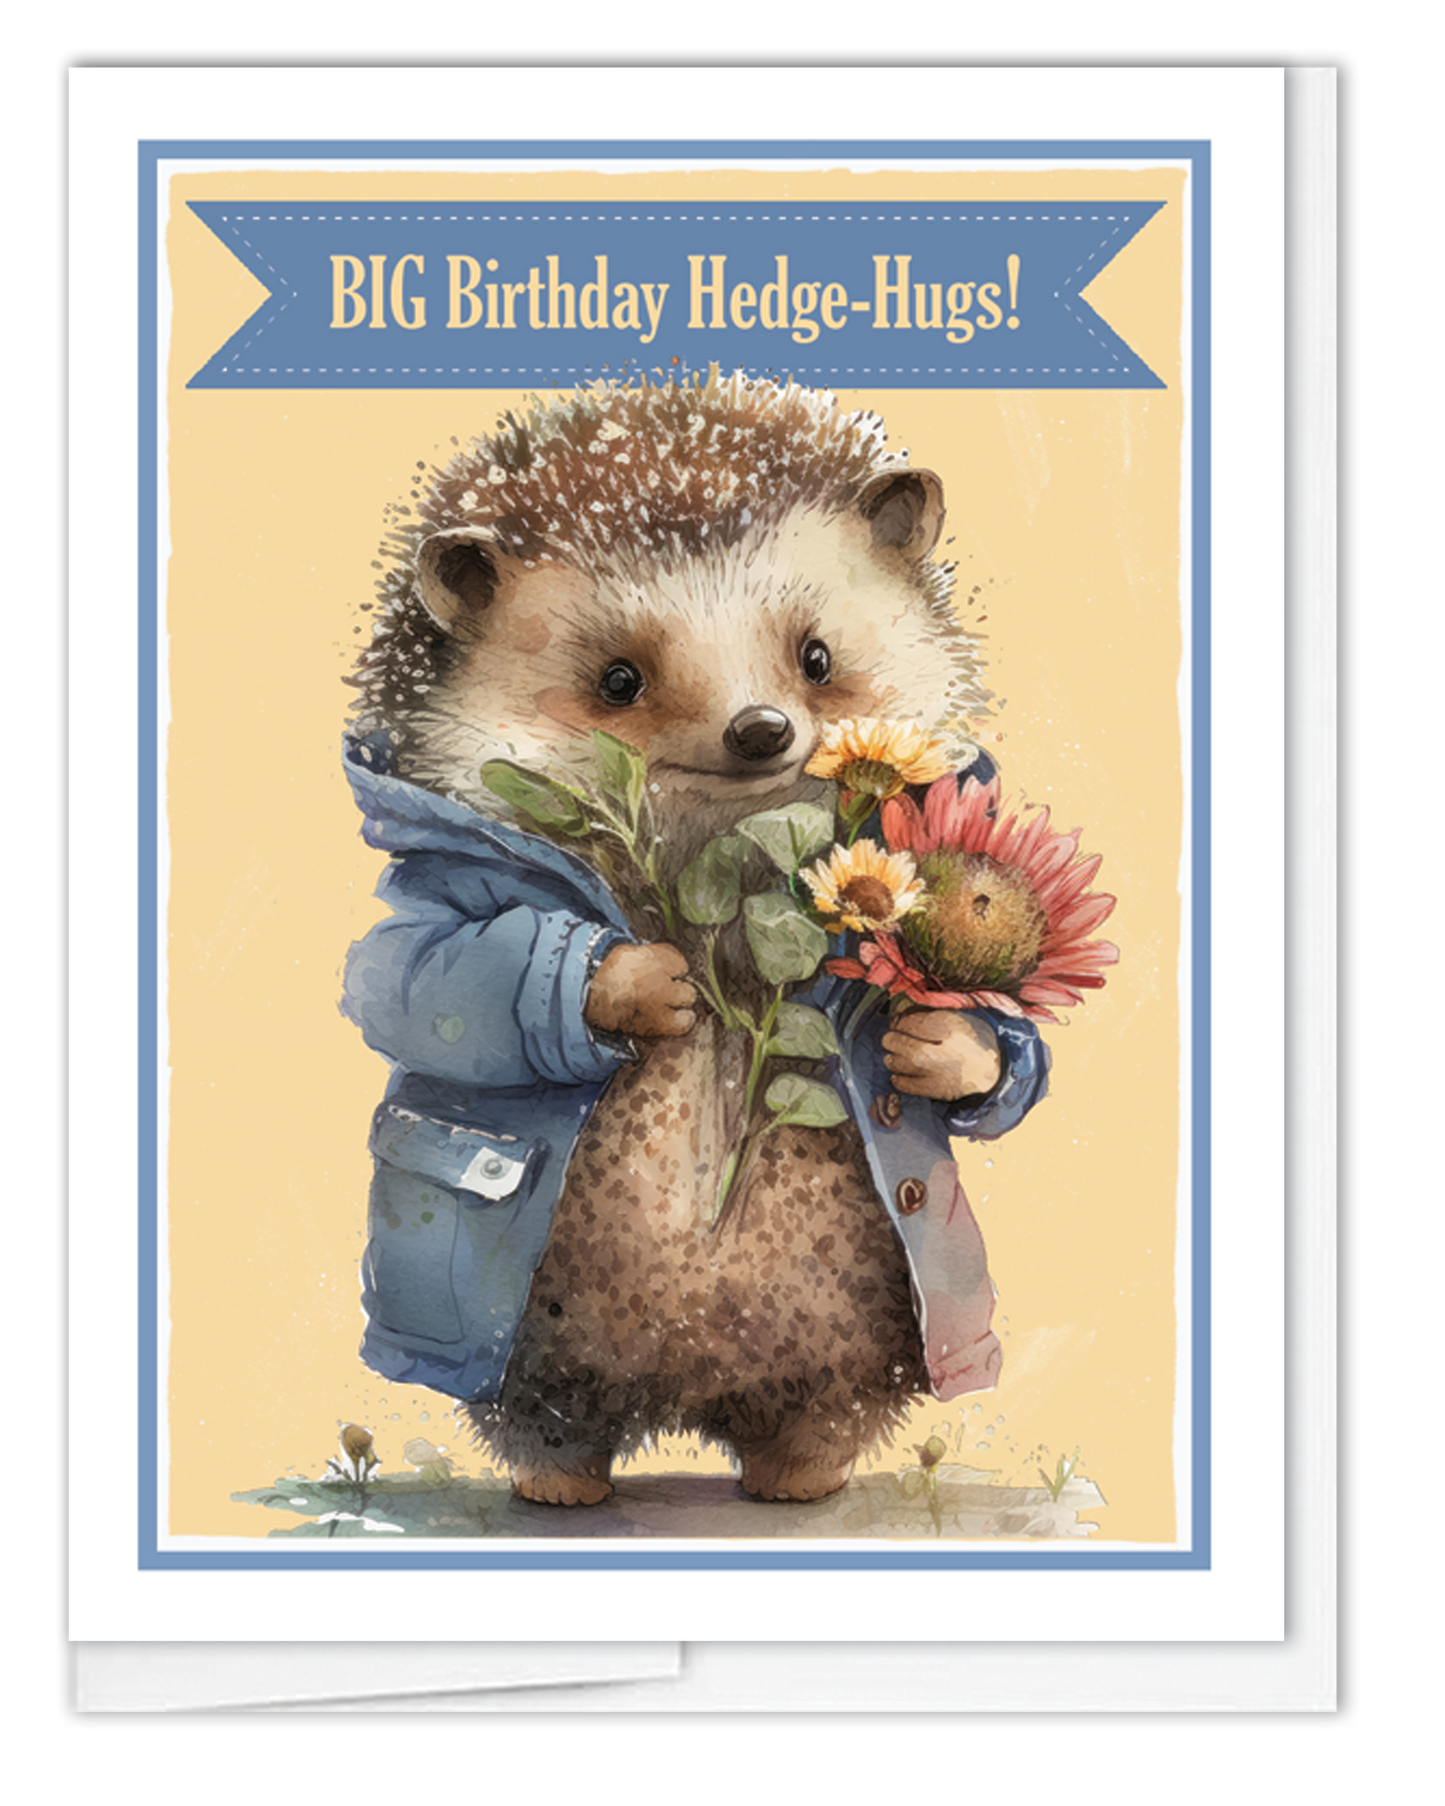 Birthday Hedge-Hugs